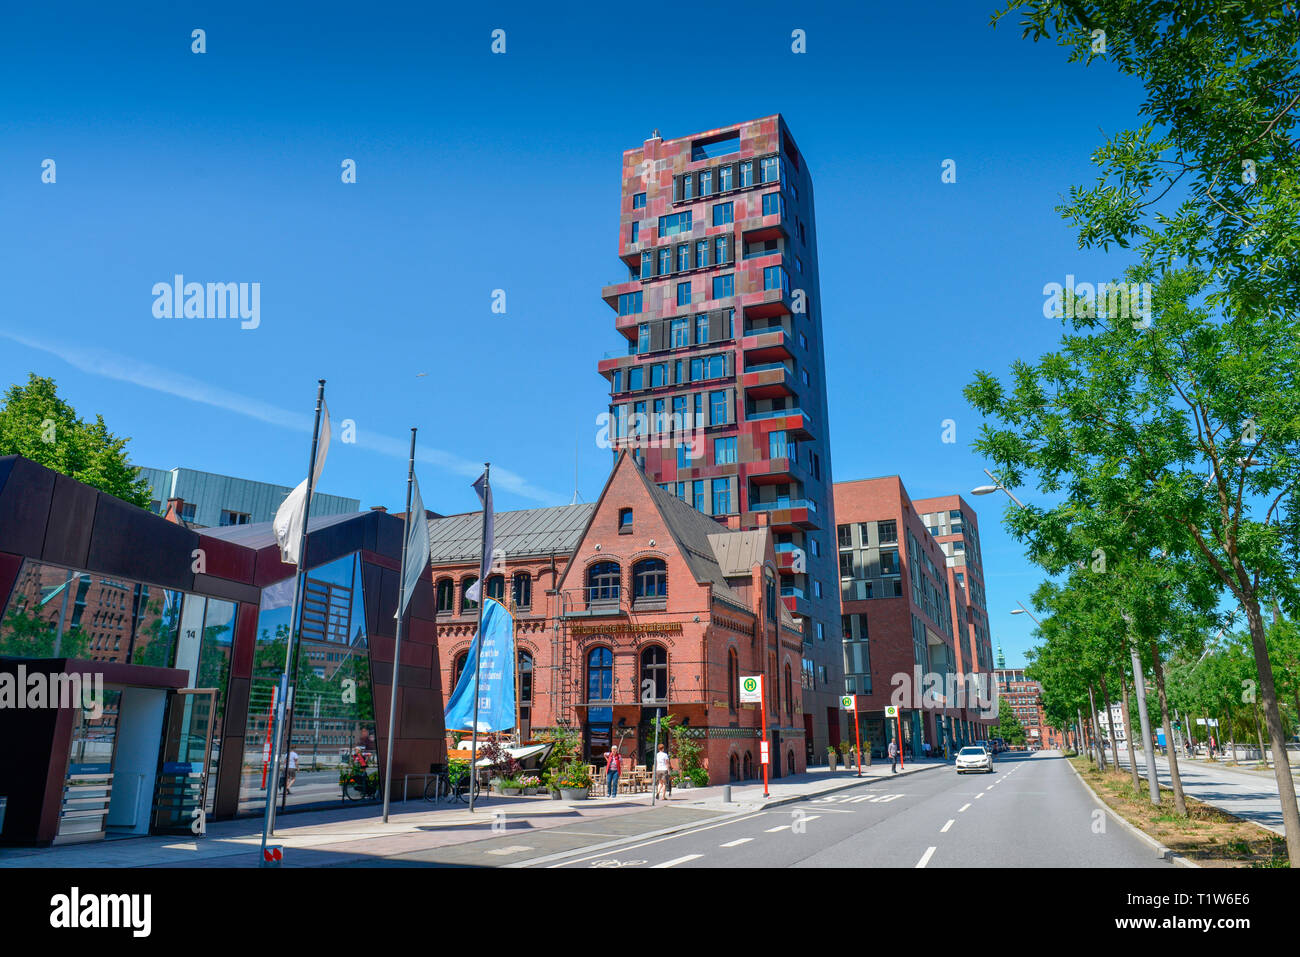 Zimt Tower, Osakaallee, Ueberseequartier, Hafencity, Hamburg, Deutschland Stockfoto